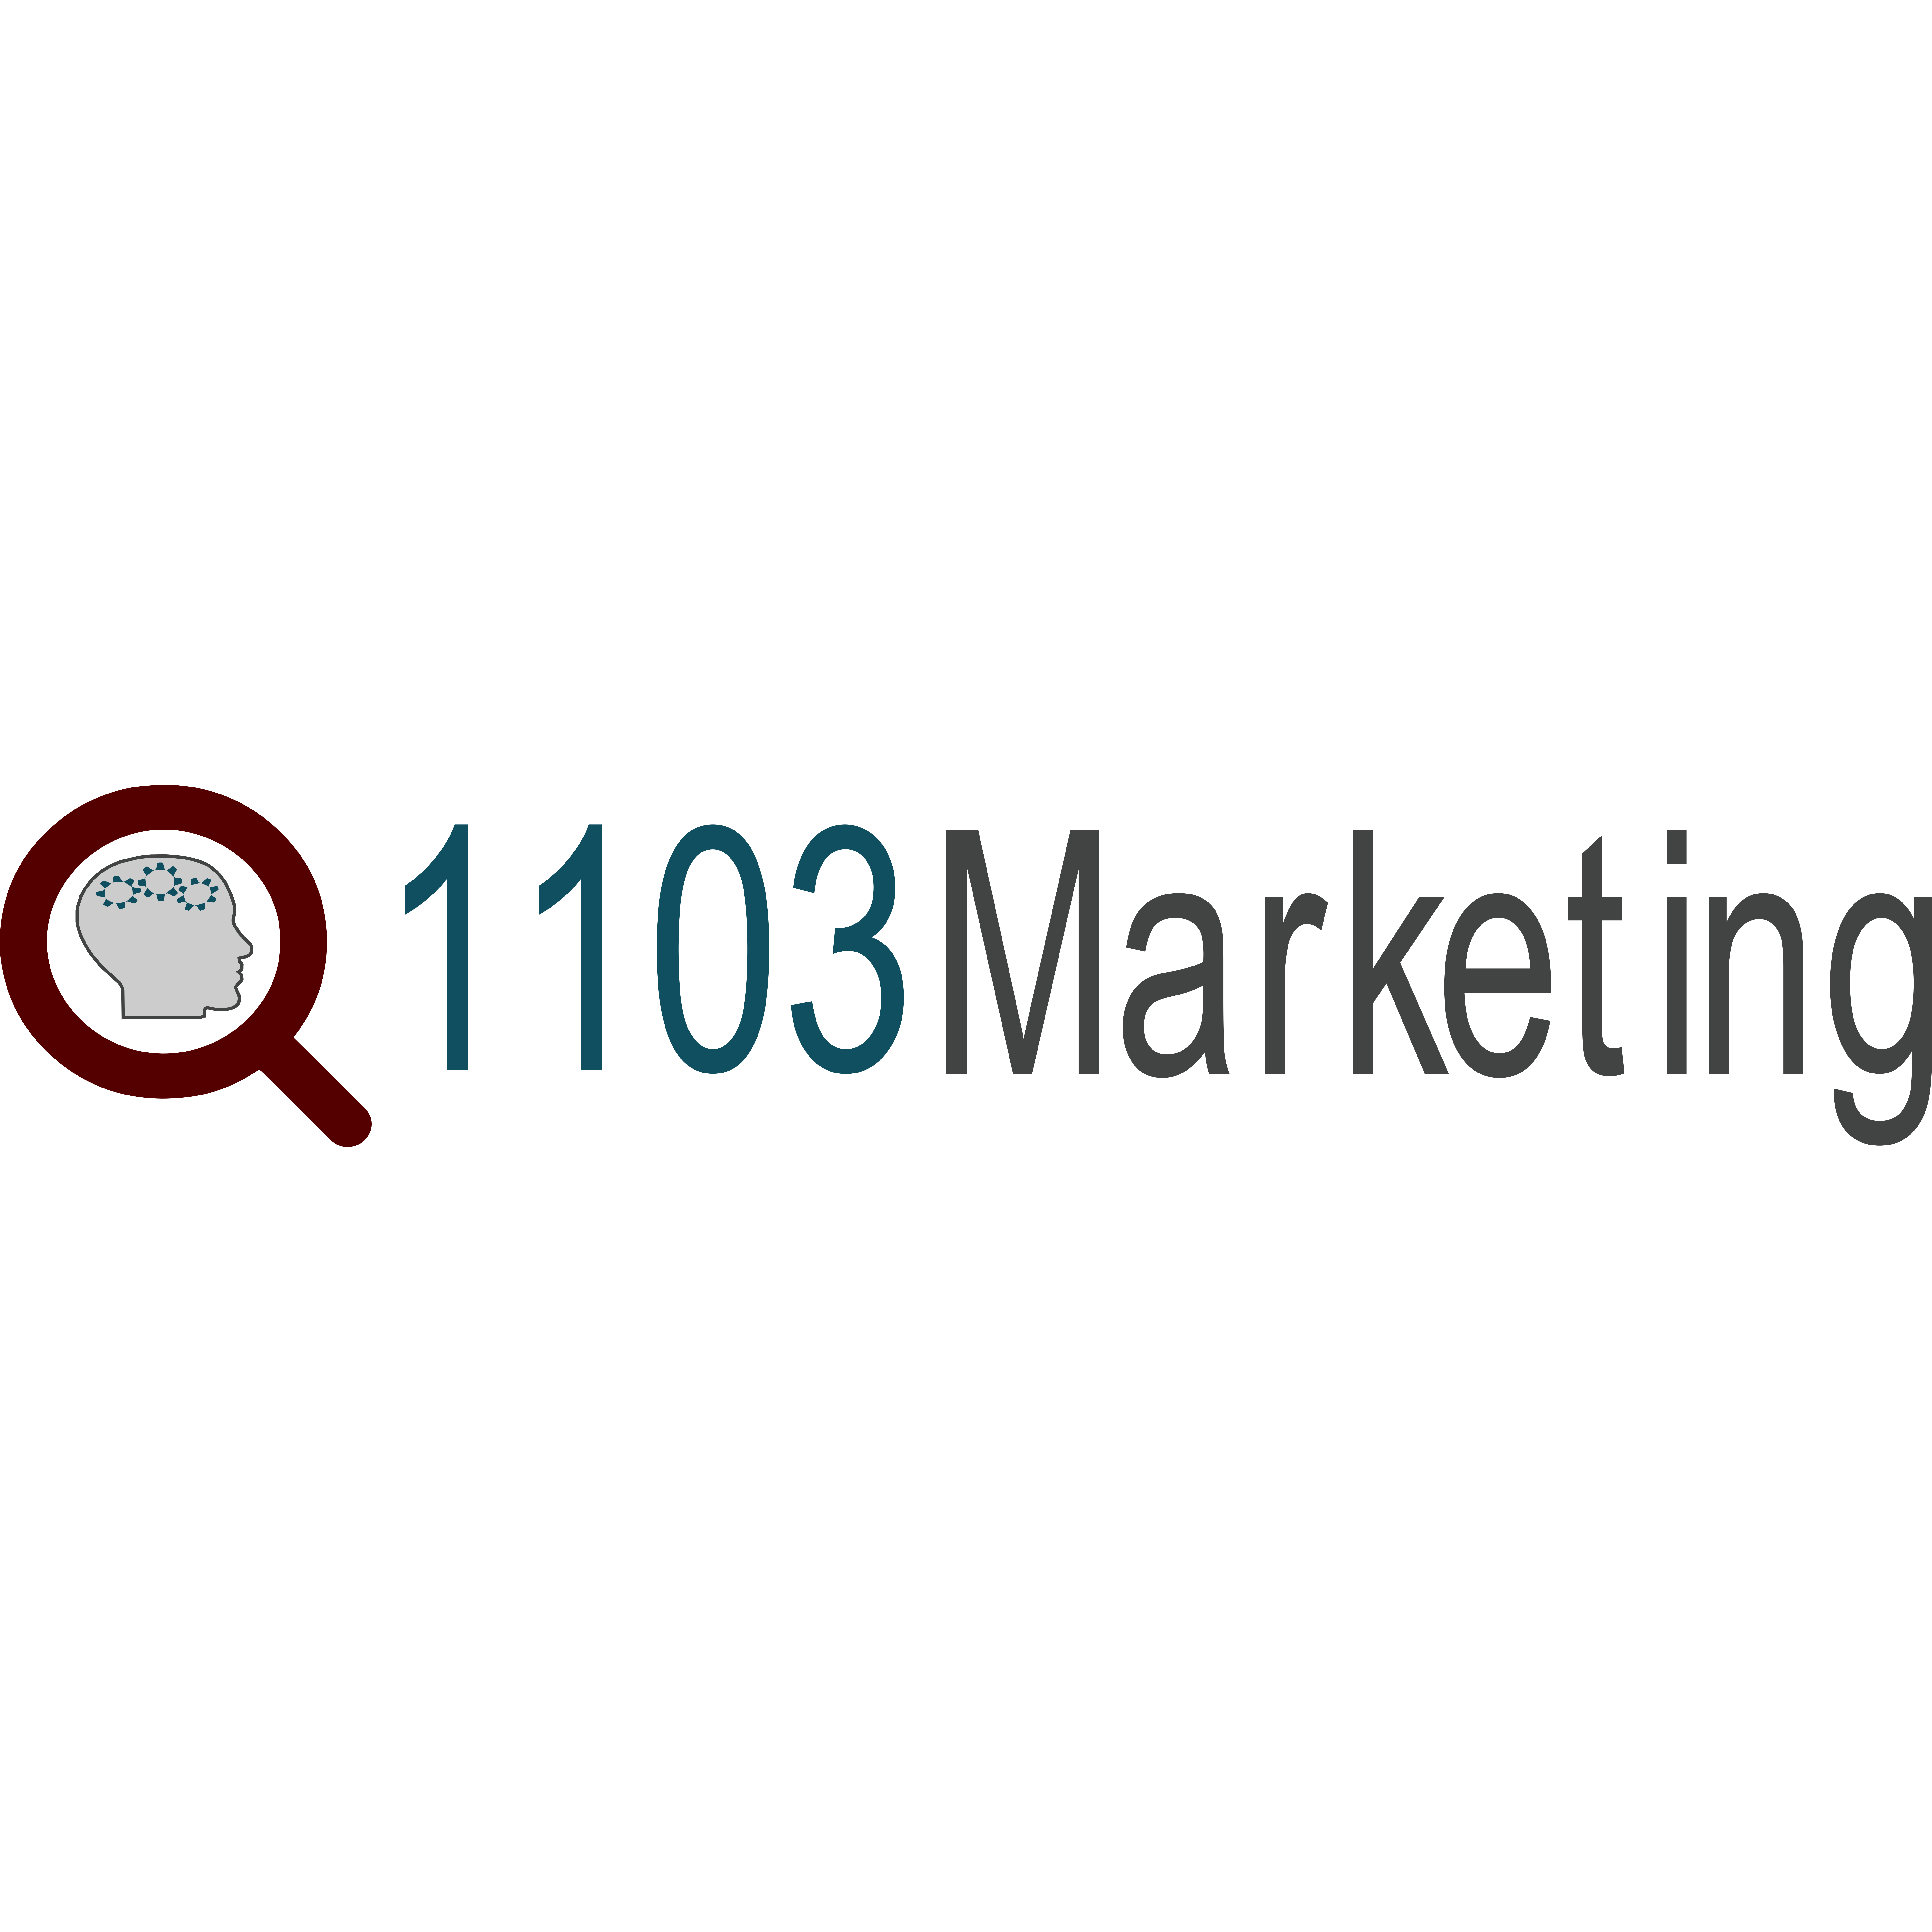 1103 Marketing Logo